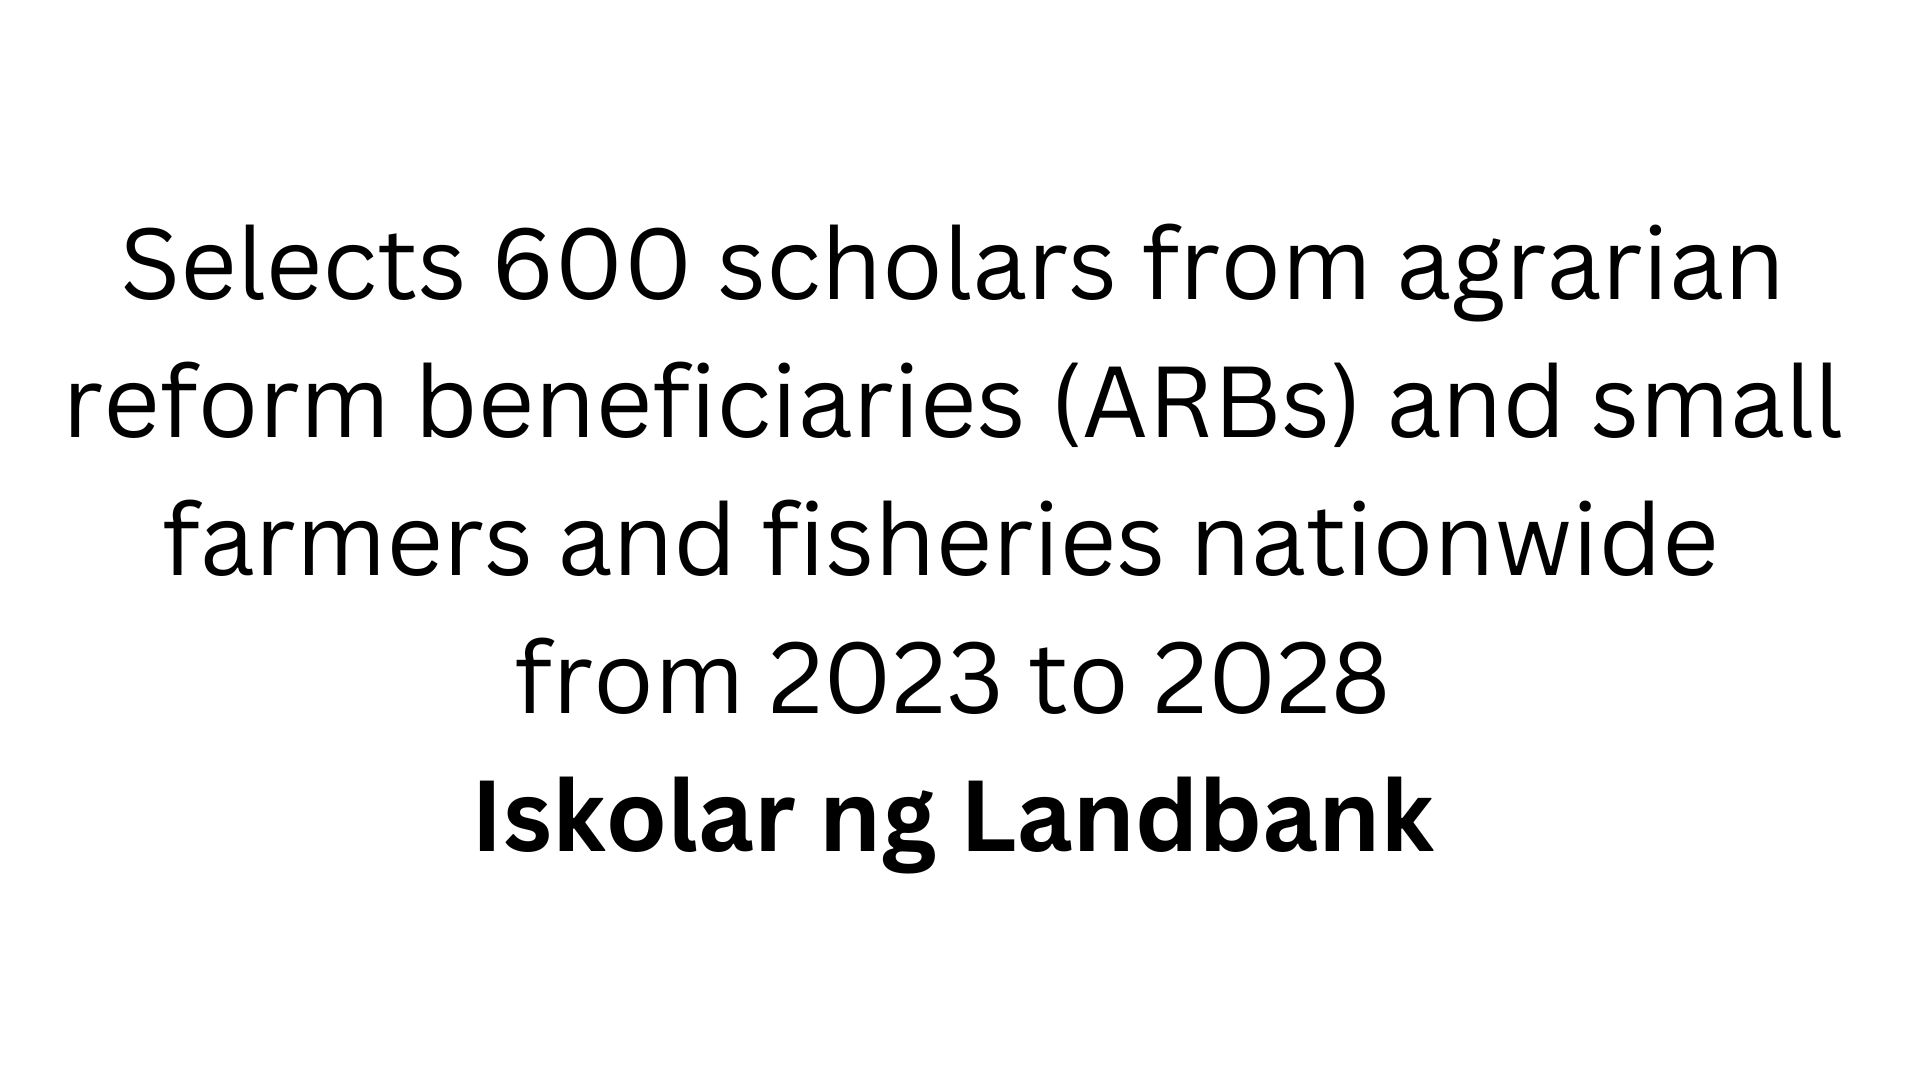 Iskolar ng Landbank 600 students from 2023 to 2028